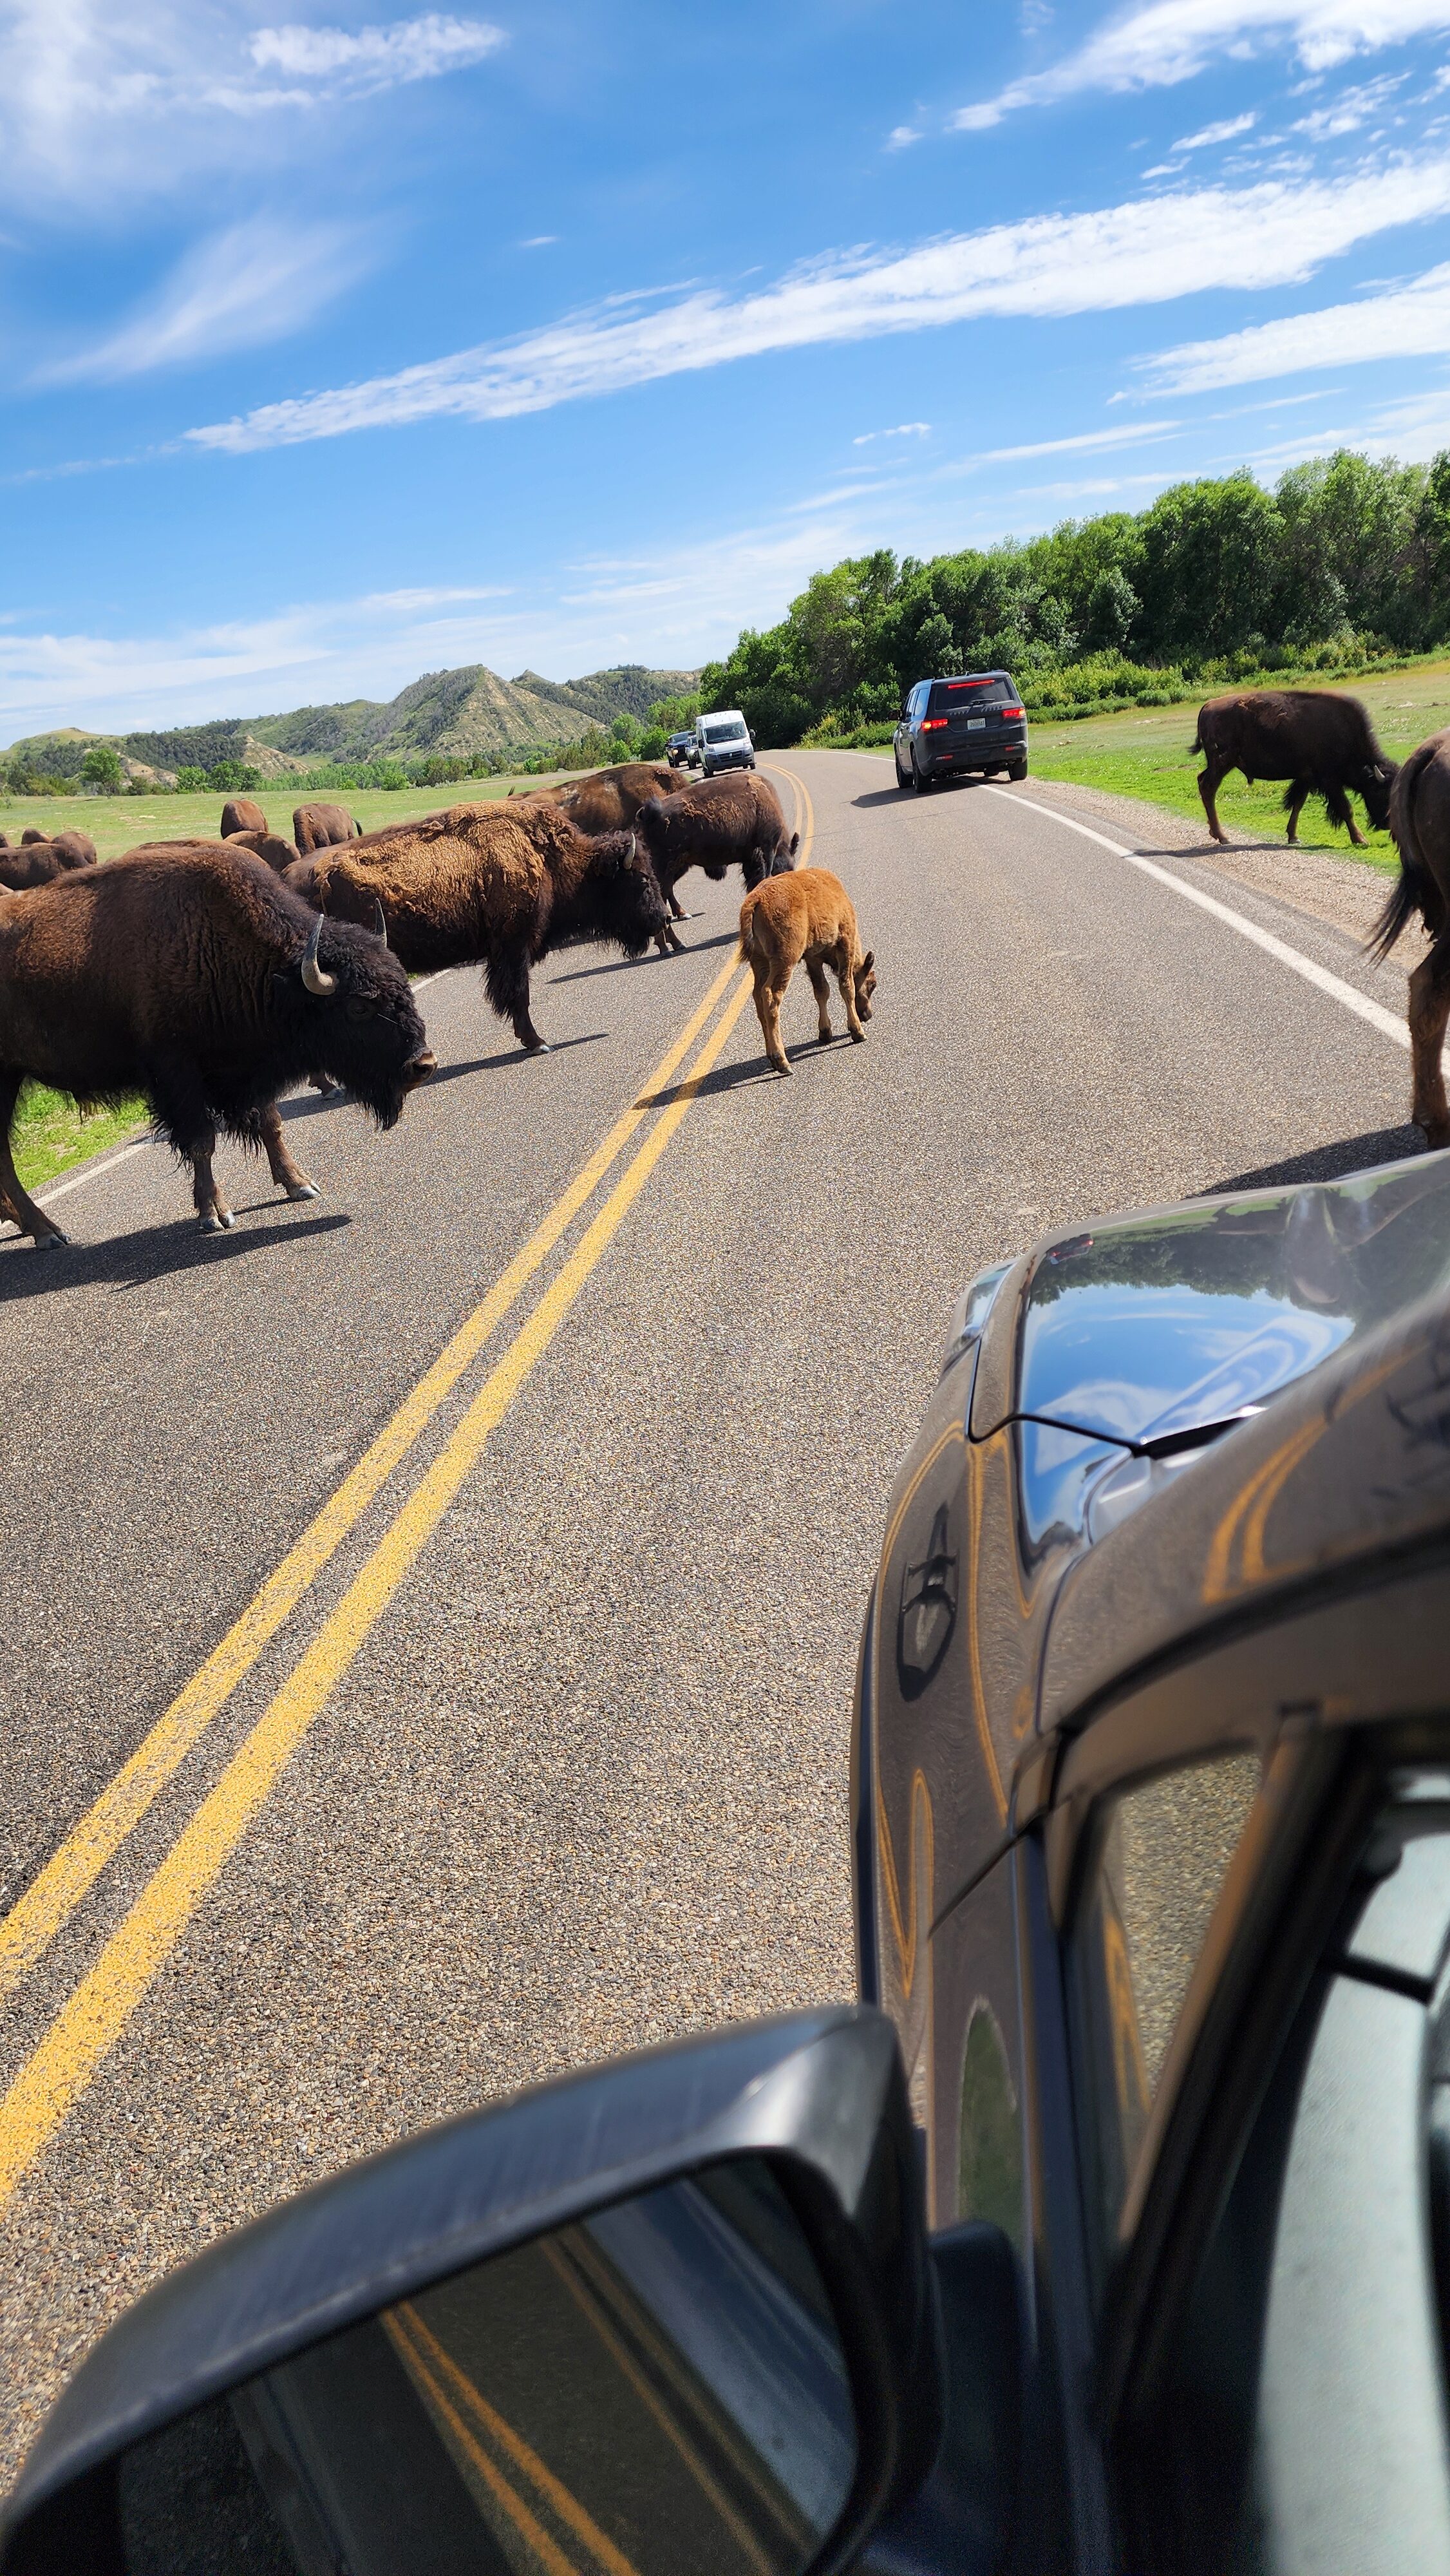 bison on road in national park